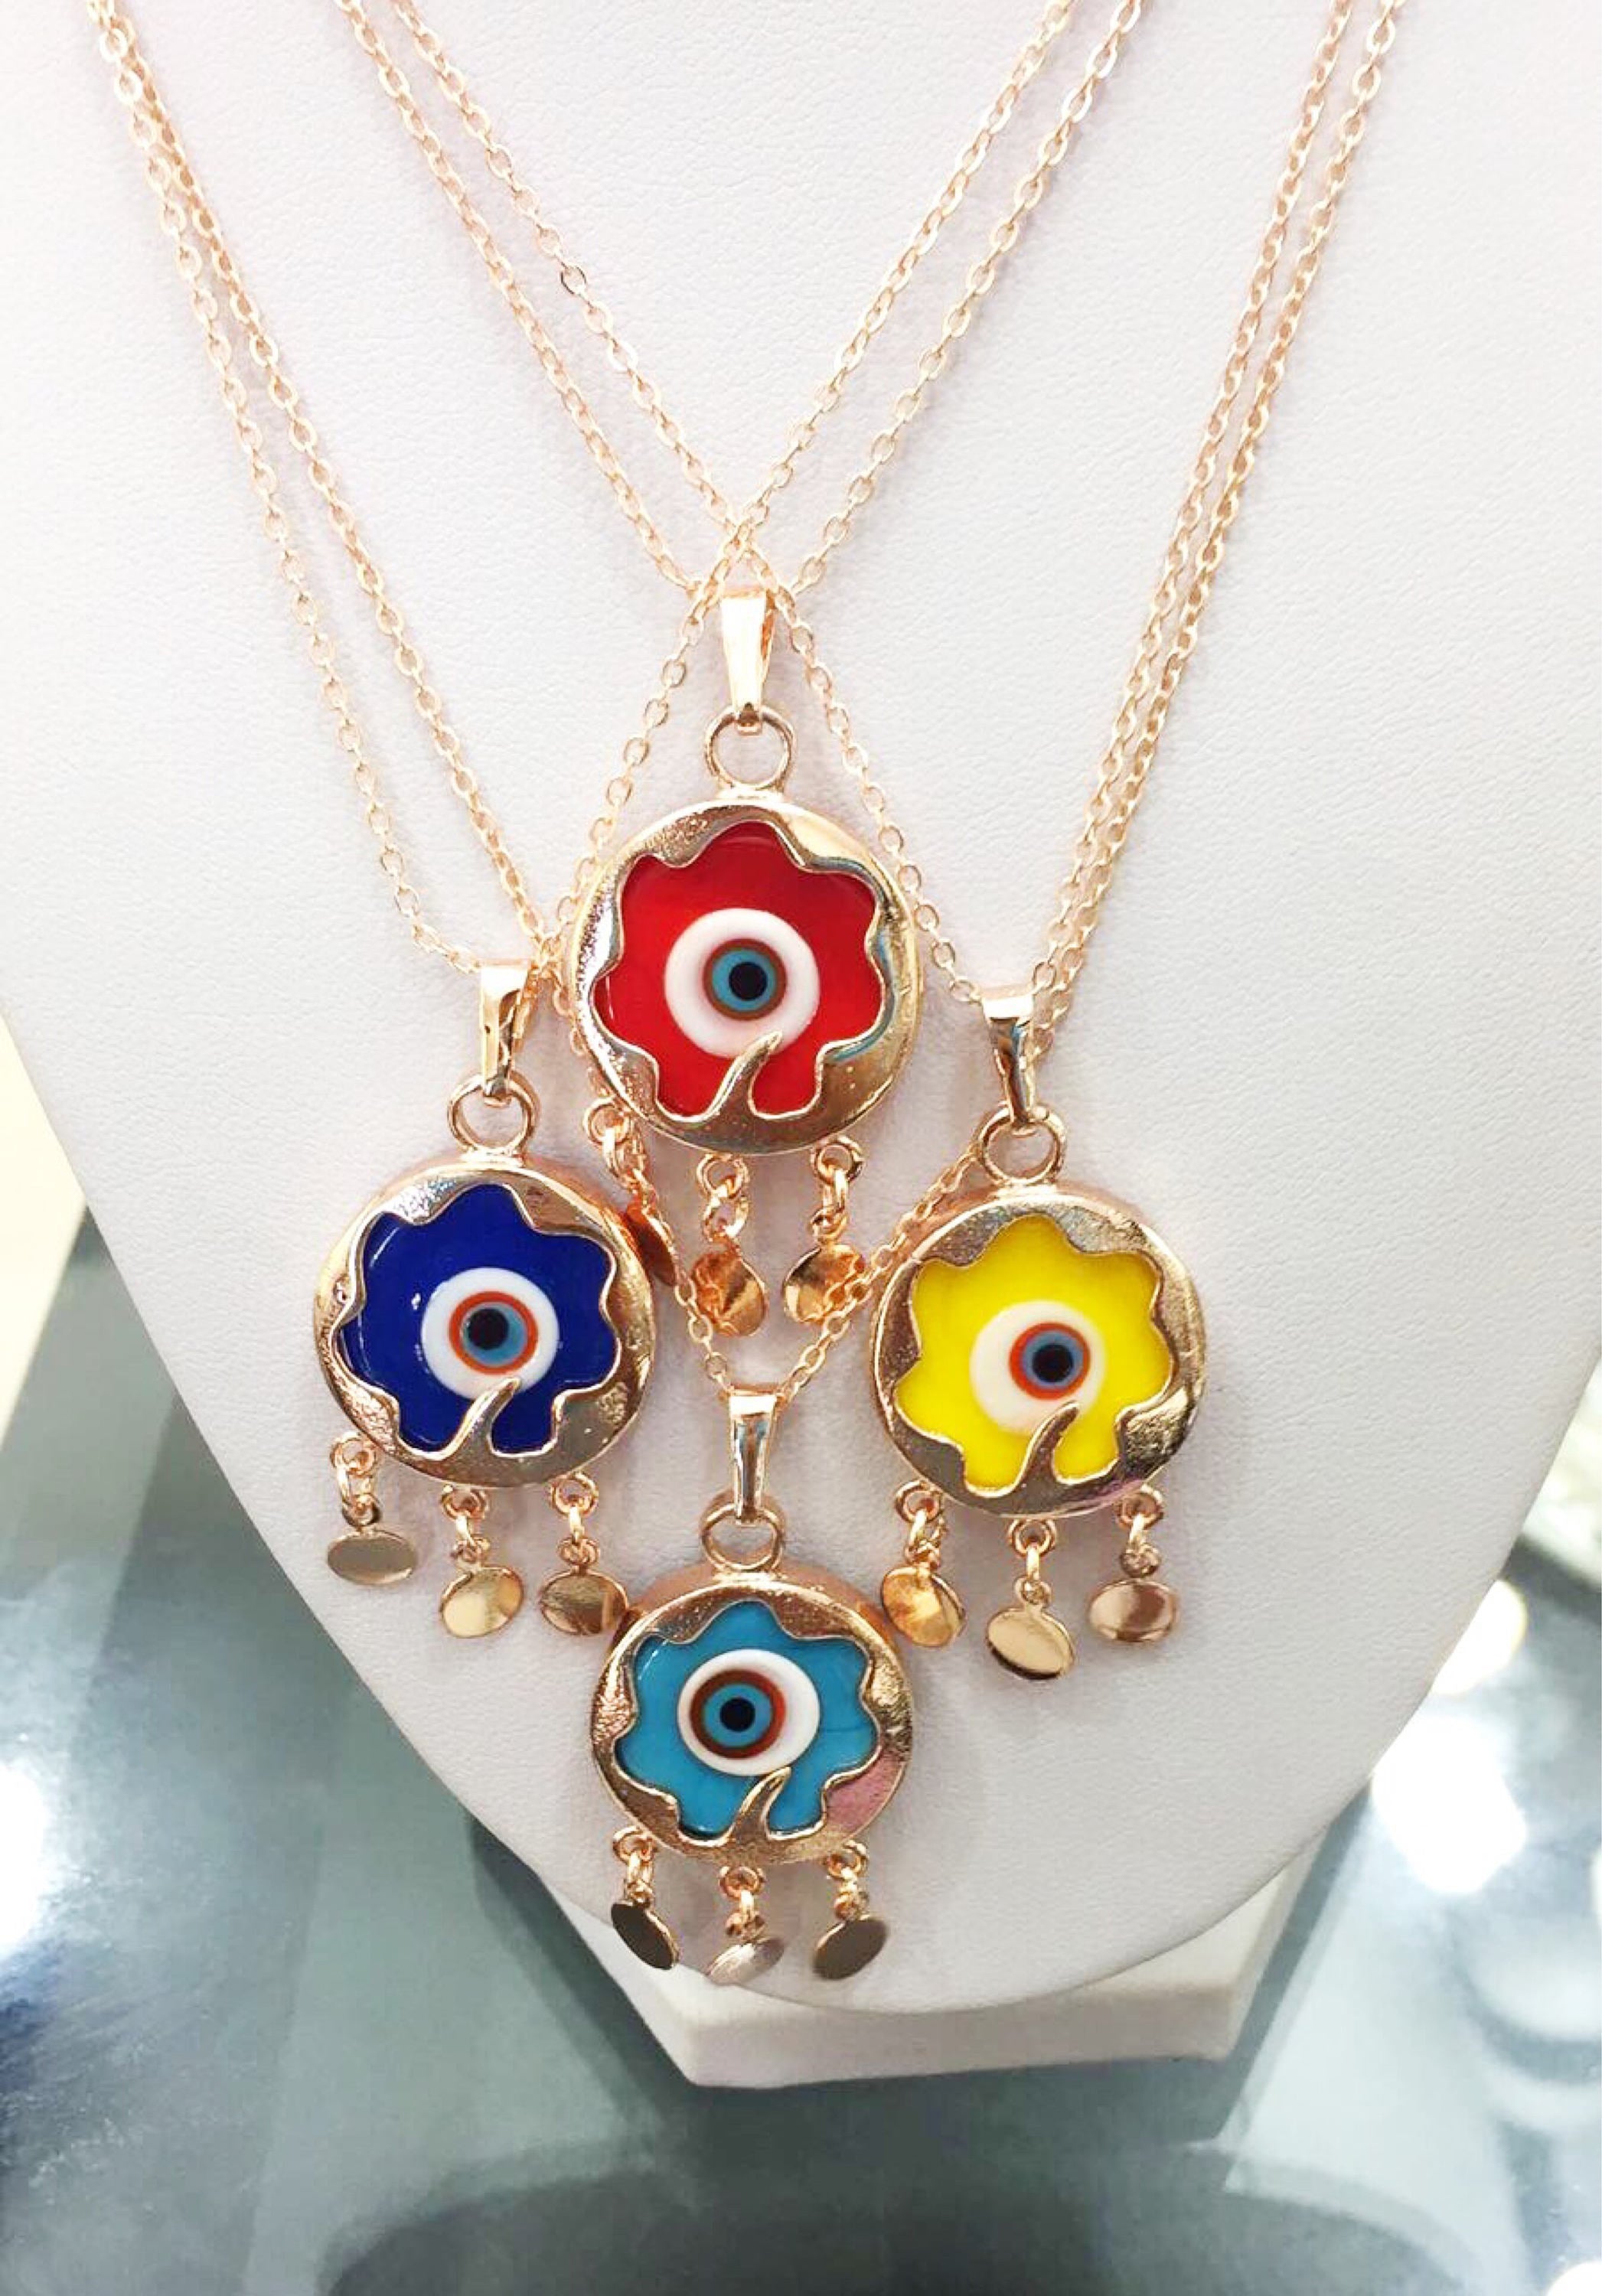 Handmade Murano Glass Evil Eye Necklace with Rose Gold Chain - Adjustable Length 50cm - Turkish Nazar Boncuk Jewelry - Jewelry & Watches - Bijou Her -  -  - 